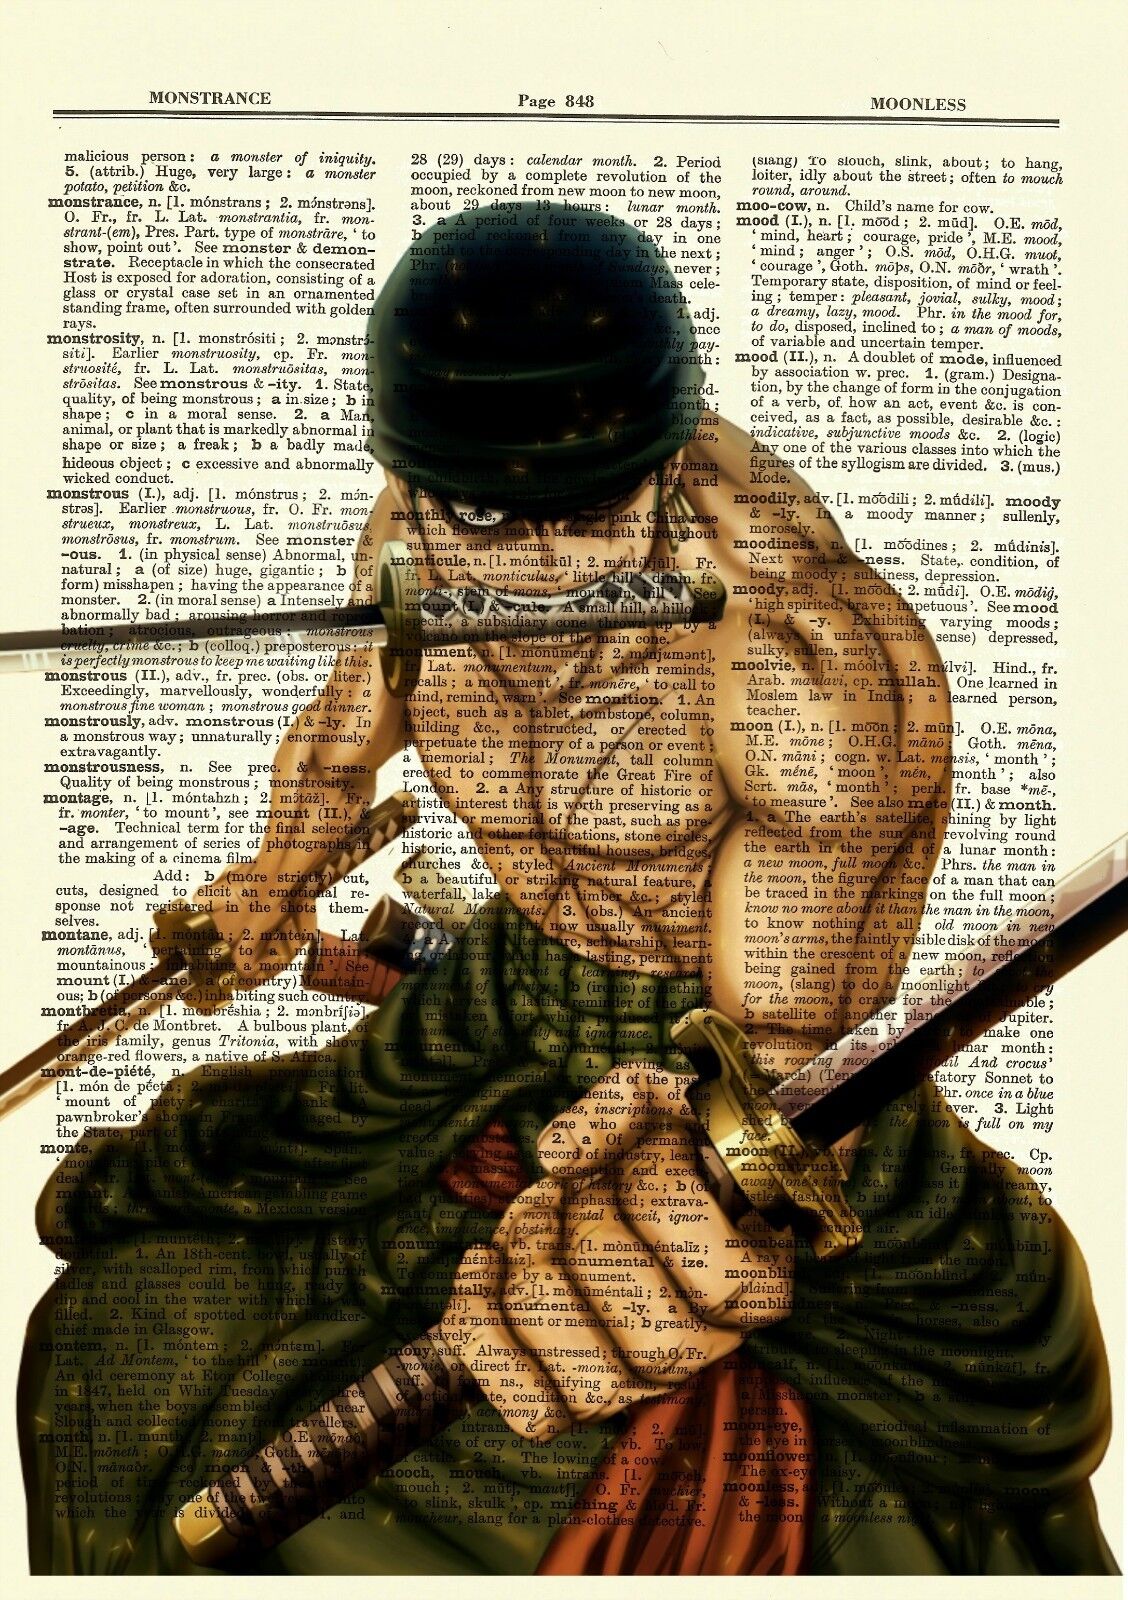 Roronoa Zoro One Piece Anime Dictionary Art Print Poster Picture Manga Book 